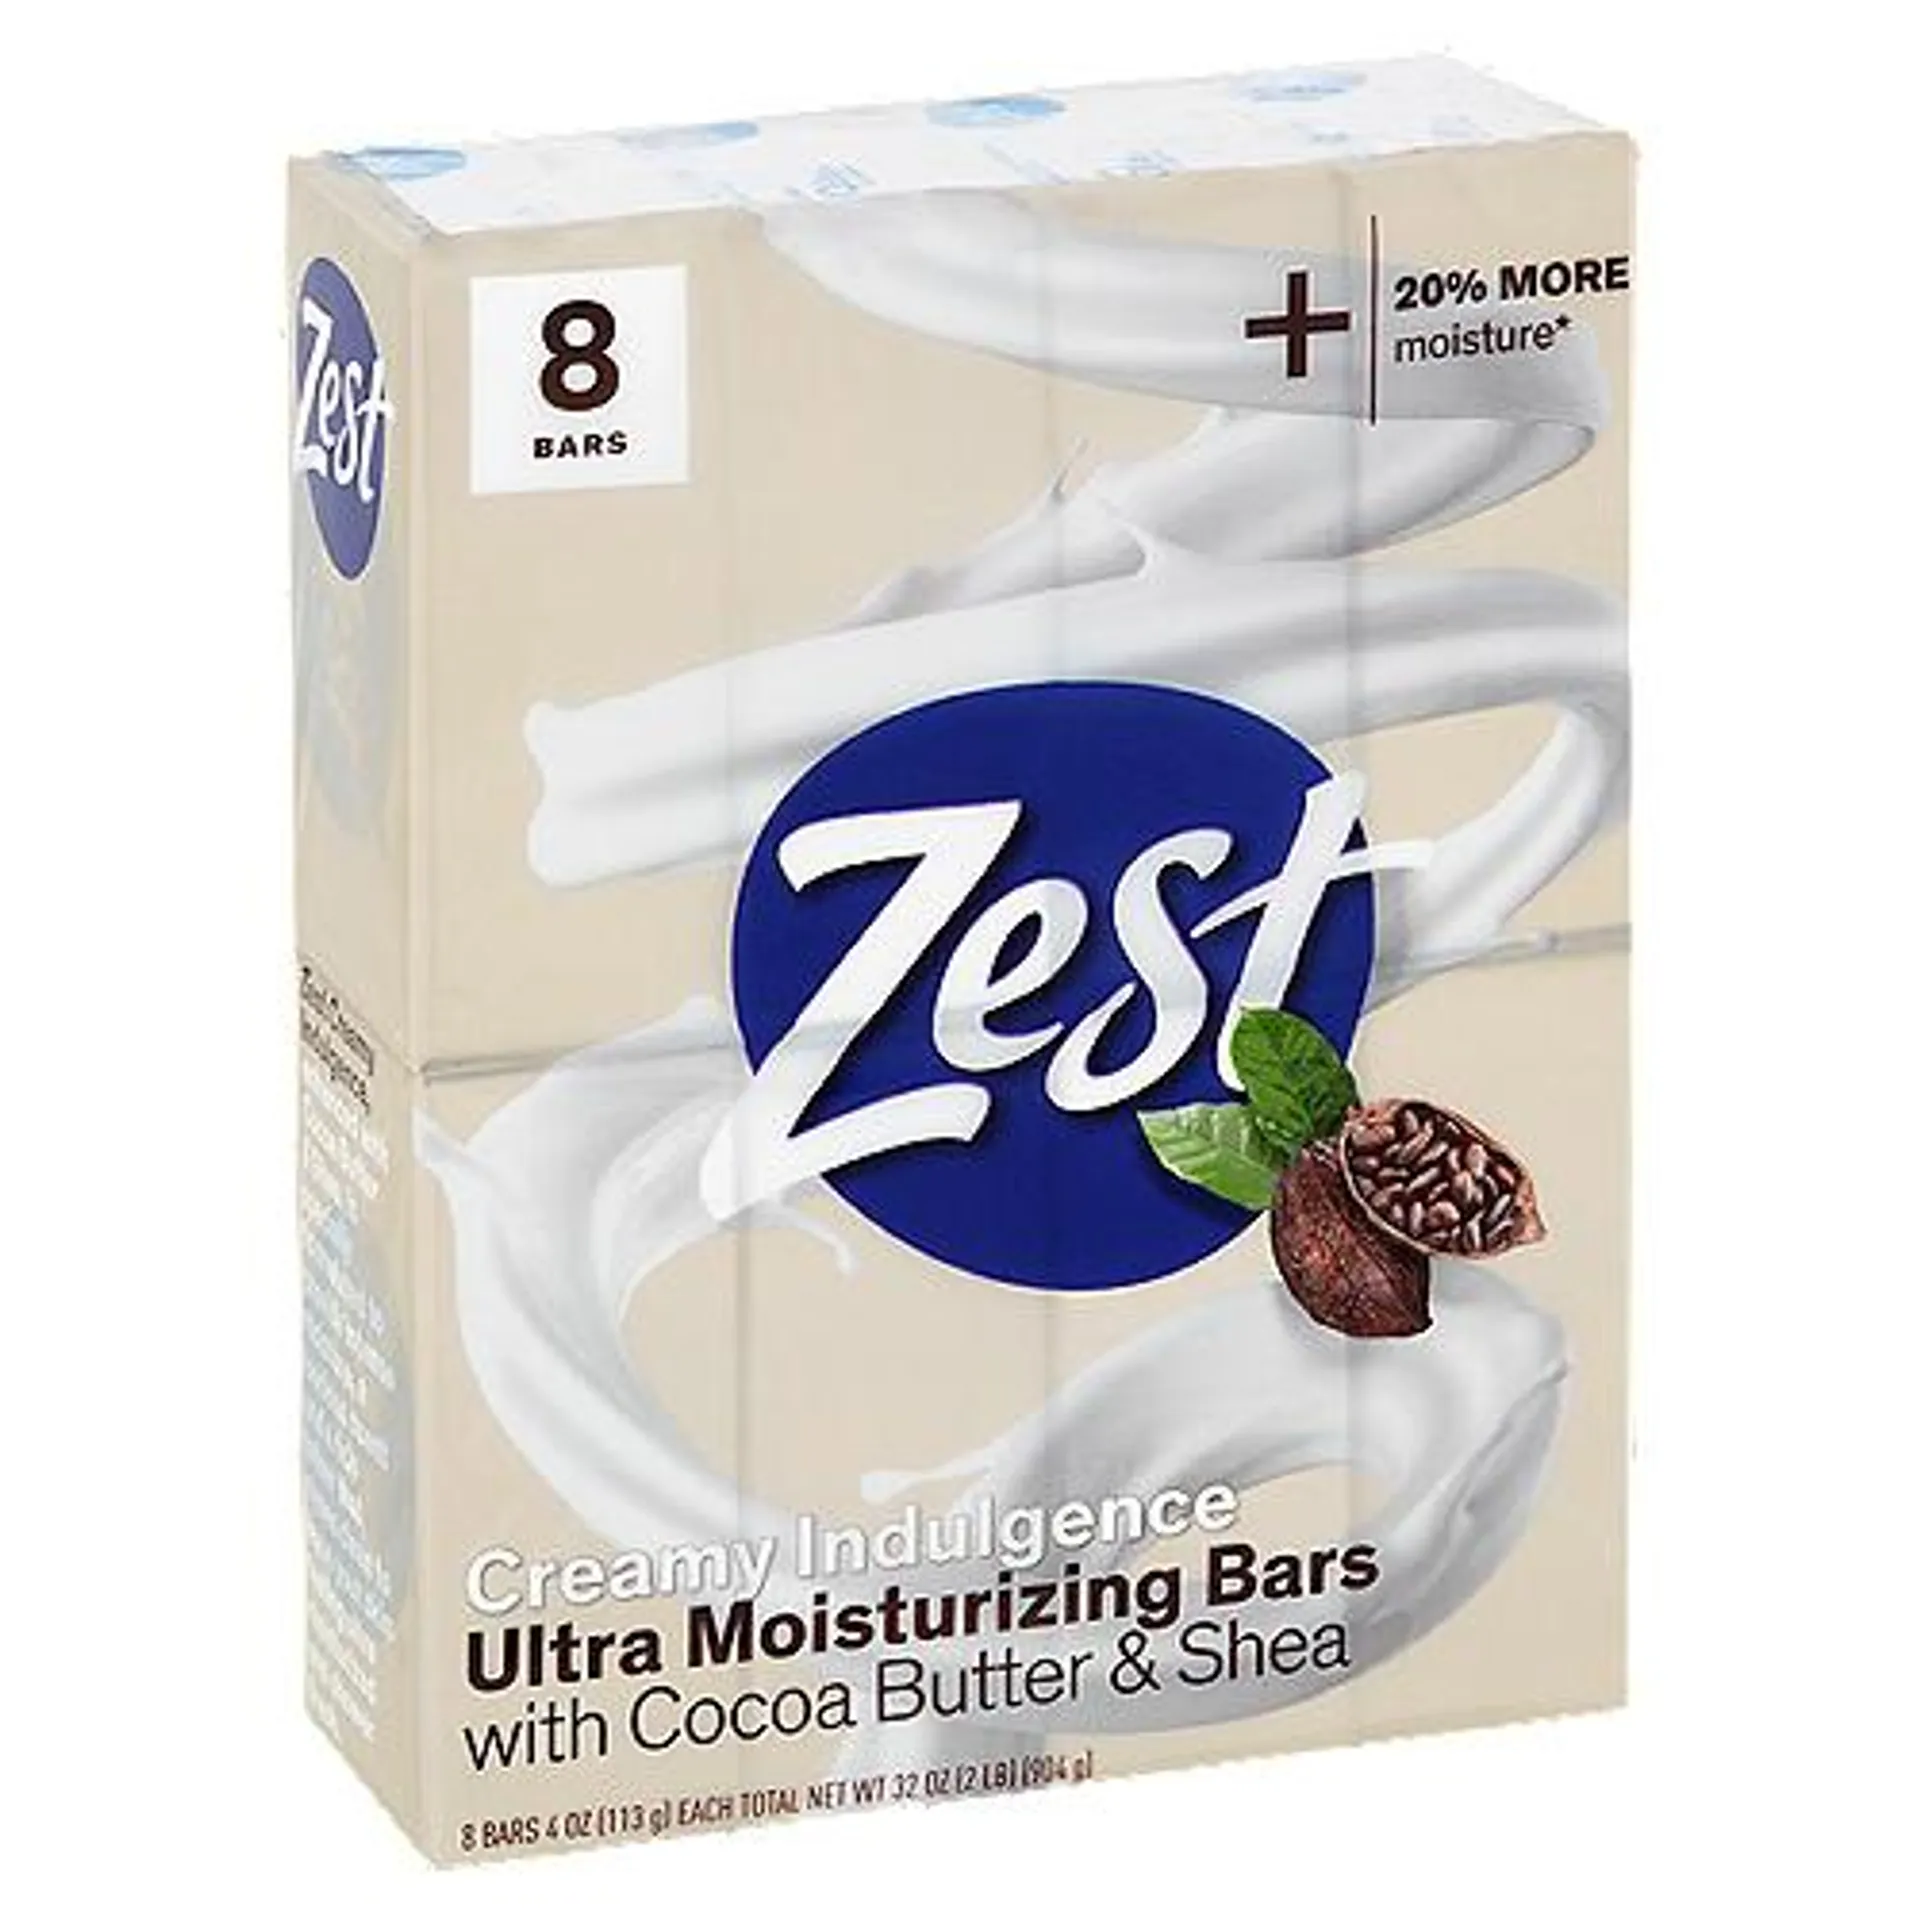 Zest Creamy Indulgence Ultra Moisturizing, Bars, 32 Ounce